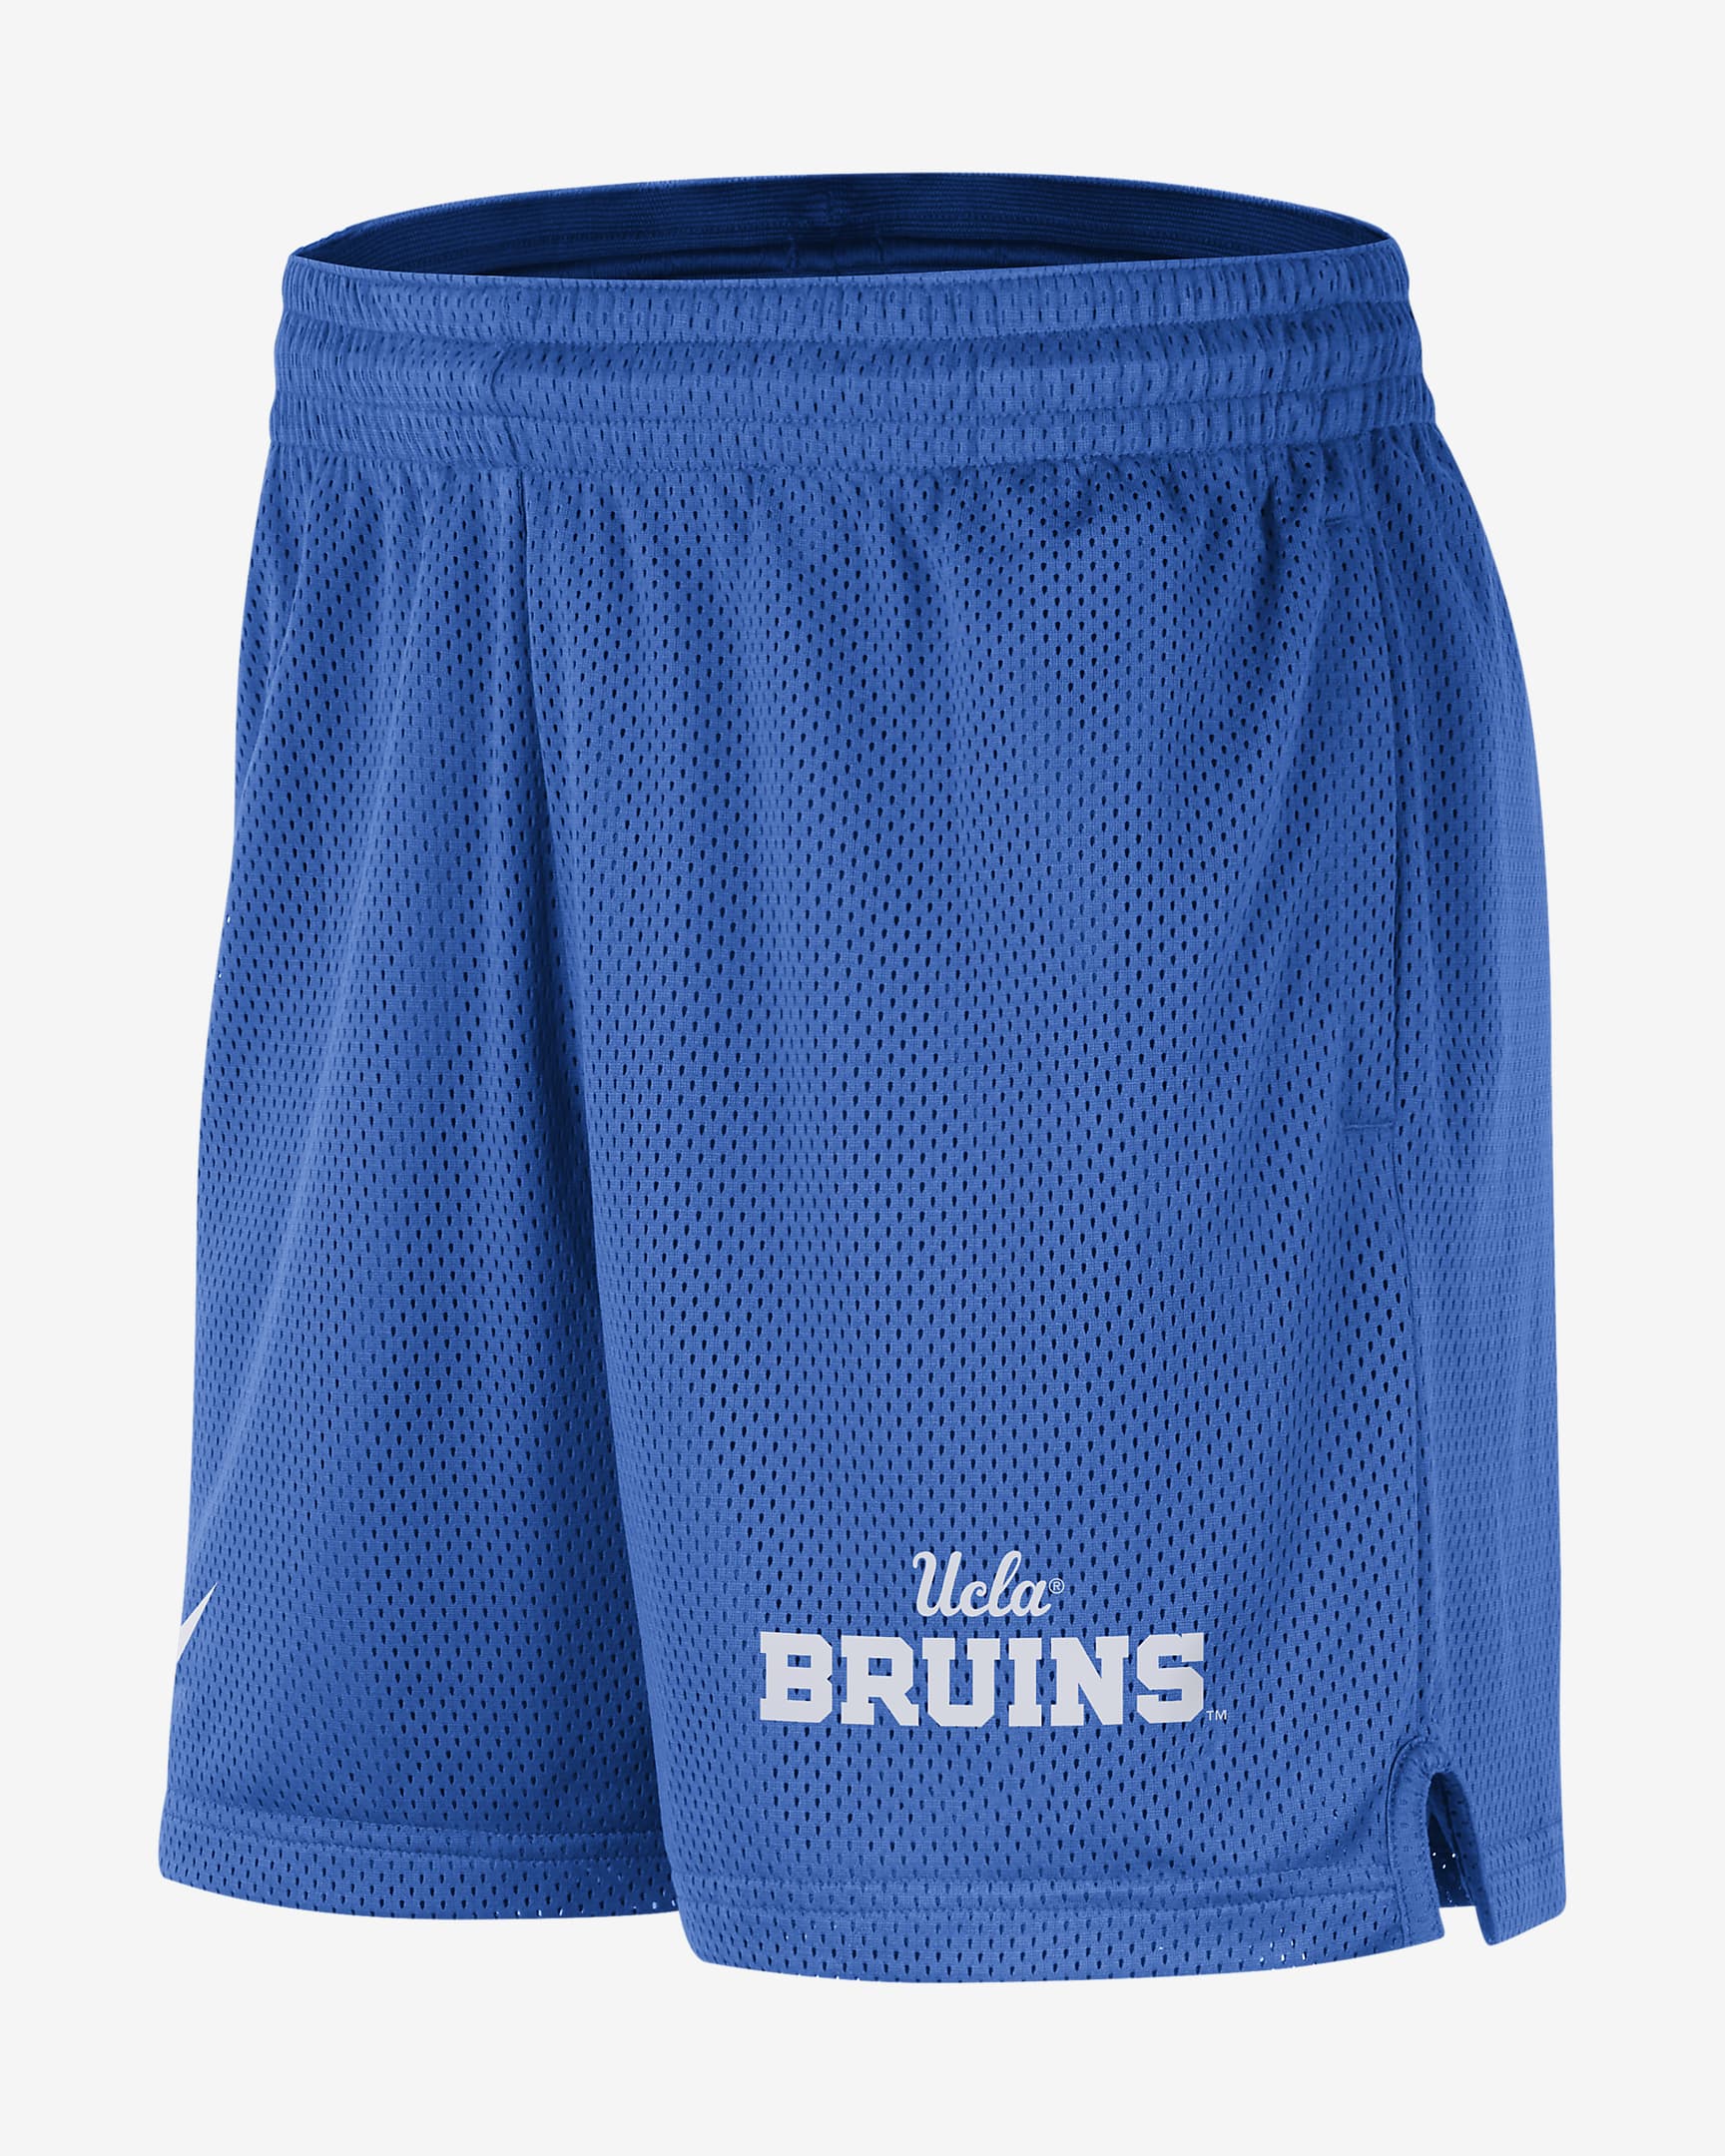 UCLA Men's Nike Dri-FIT College Knit Shorts. Nike.com